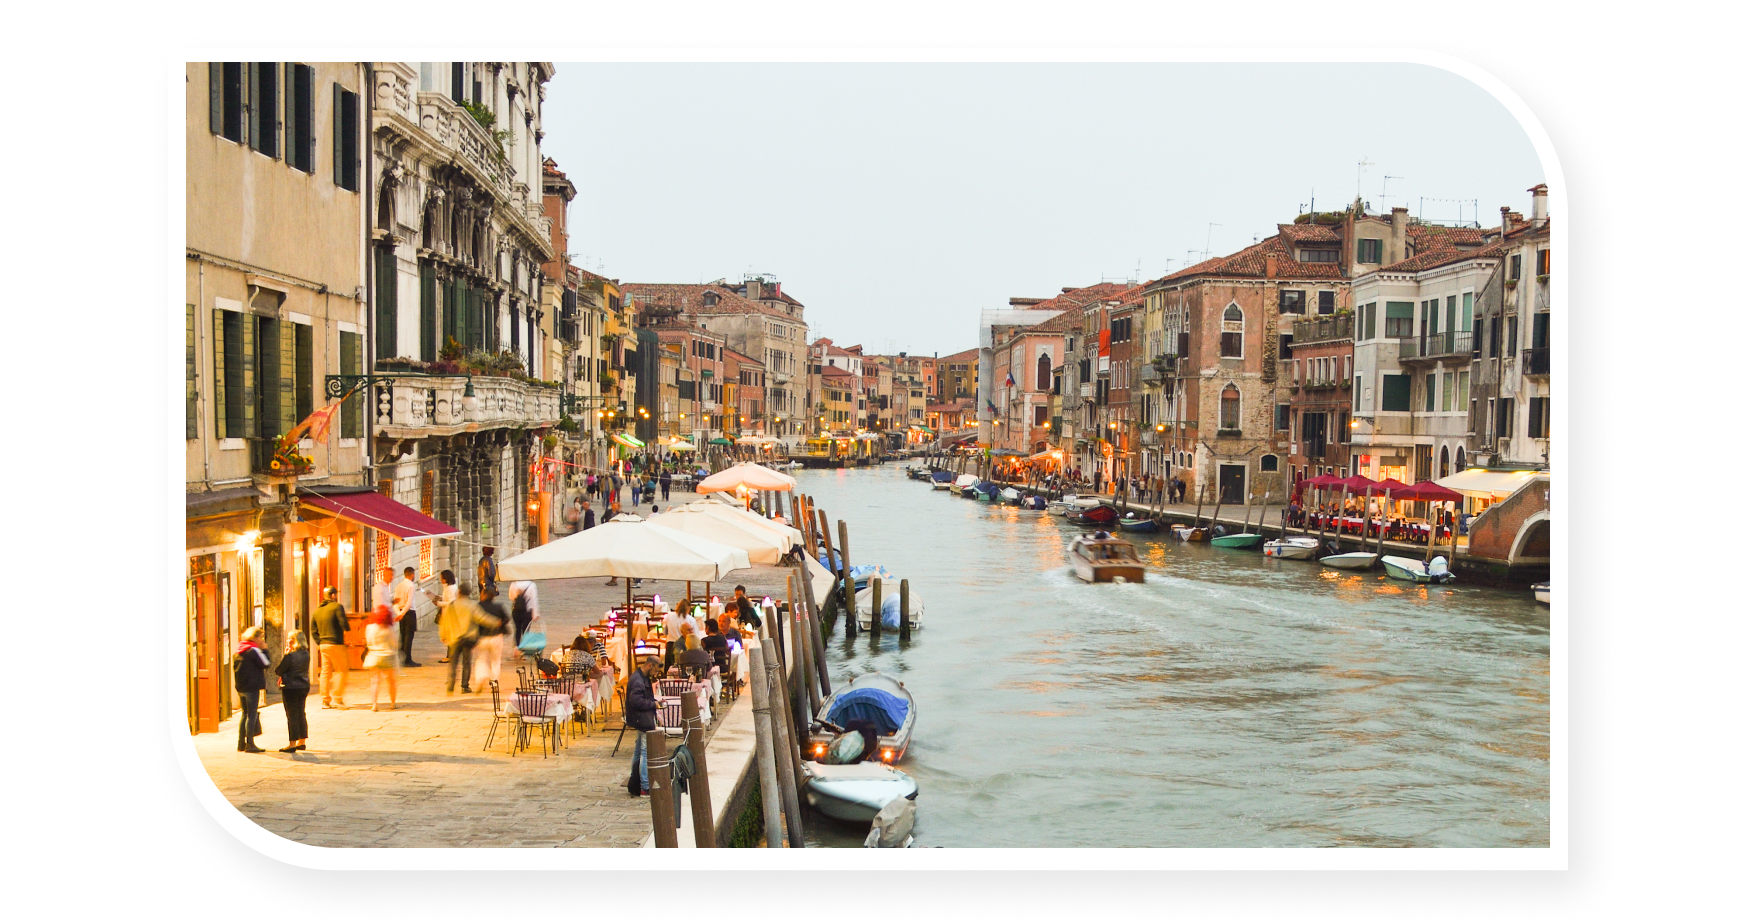 Bars & restaurants next to Venice canal